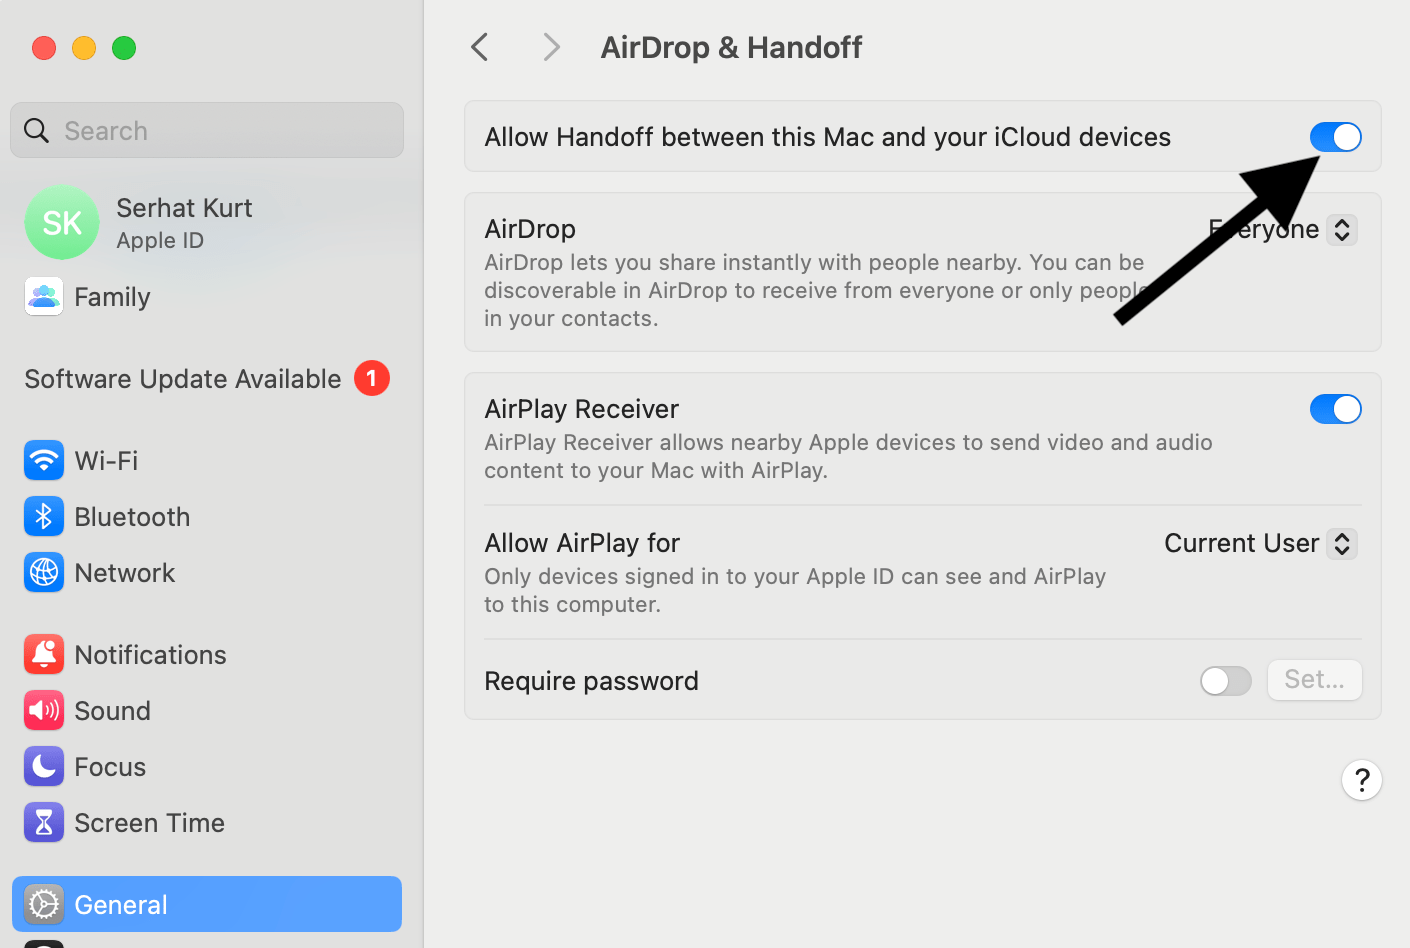 Mac setting screen showing the Handoff option